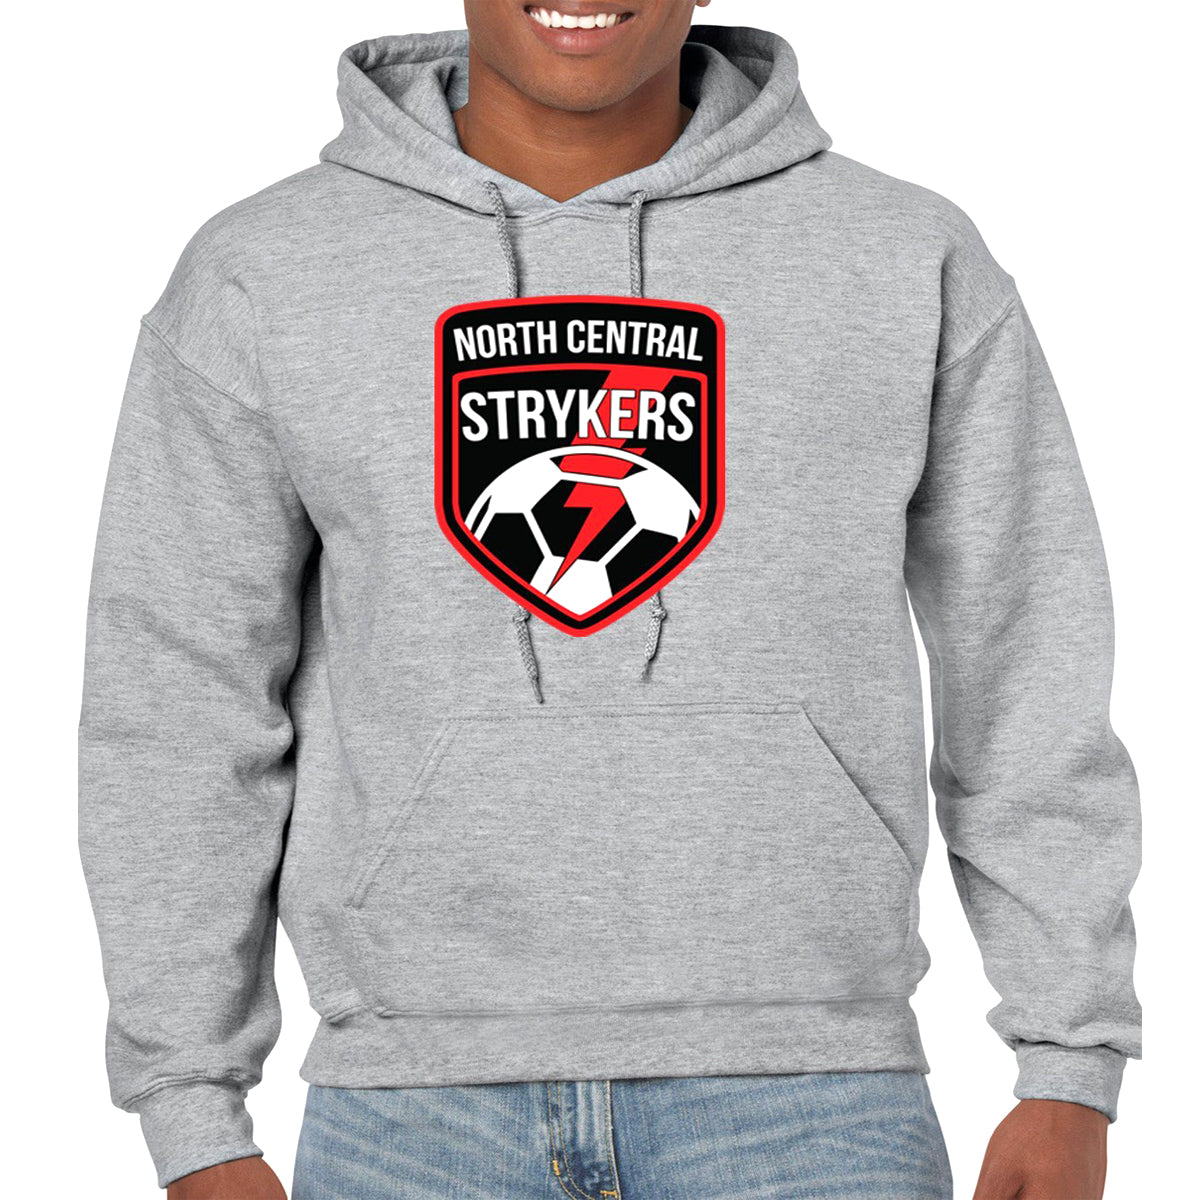 North Central Strykers Heavy Blend Hooded Sweatshirt Apparel Goal Kick Soccer Youth Medium Sport Grey 